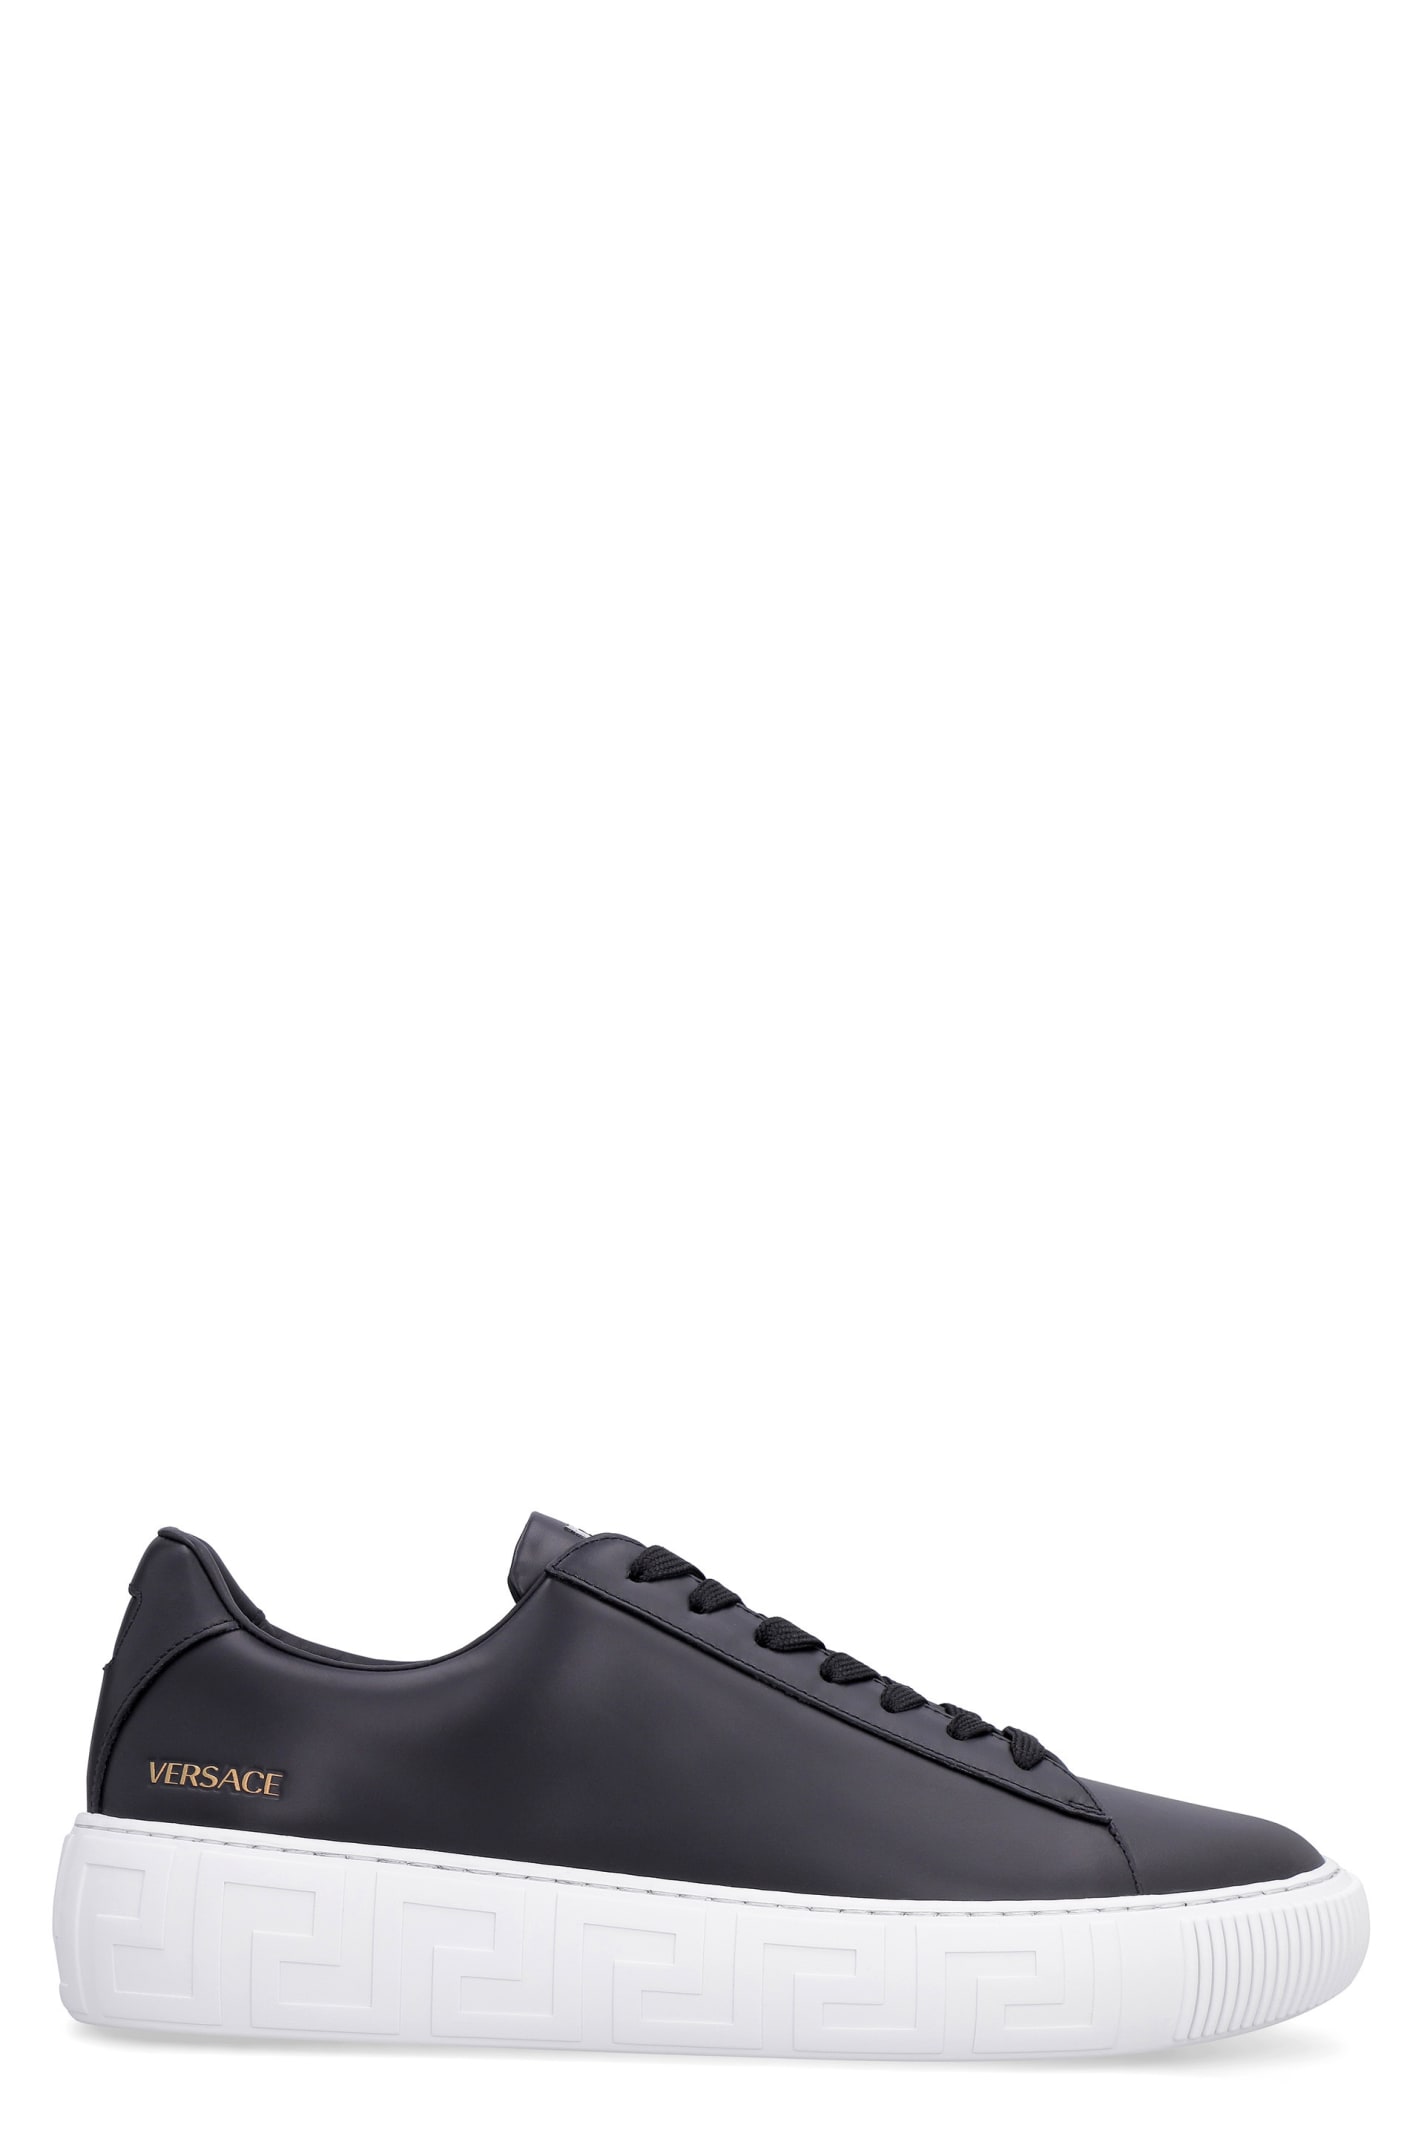 Versace Greca Leather Sneakers